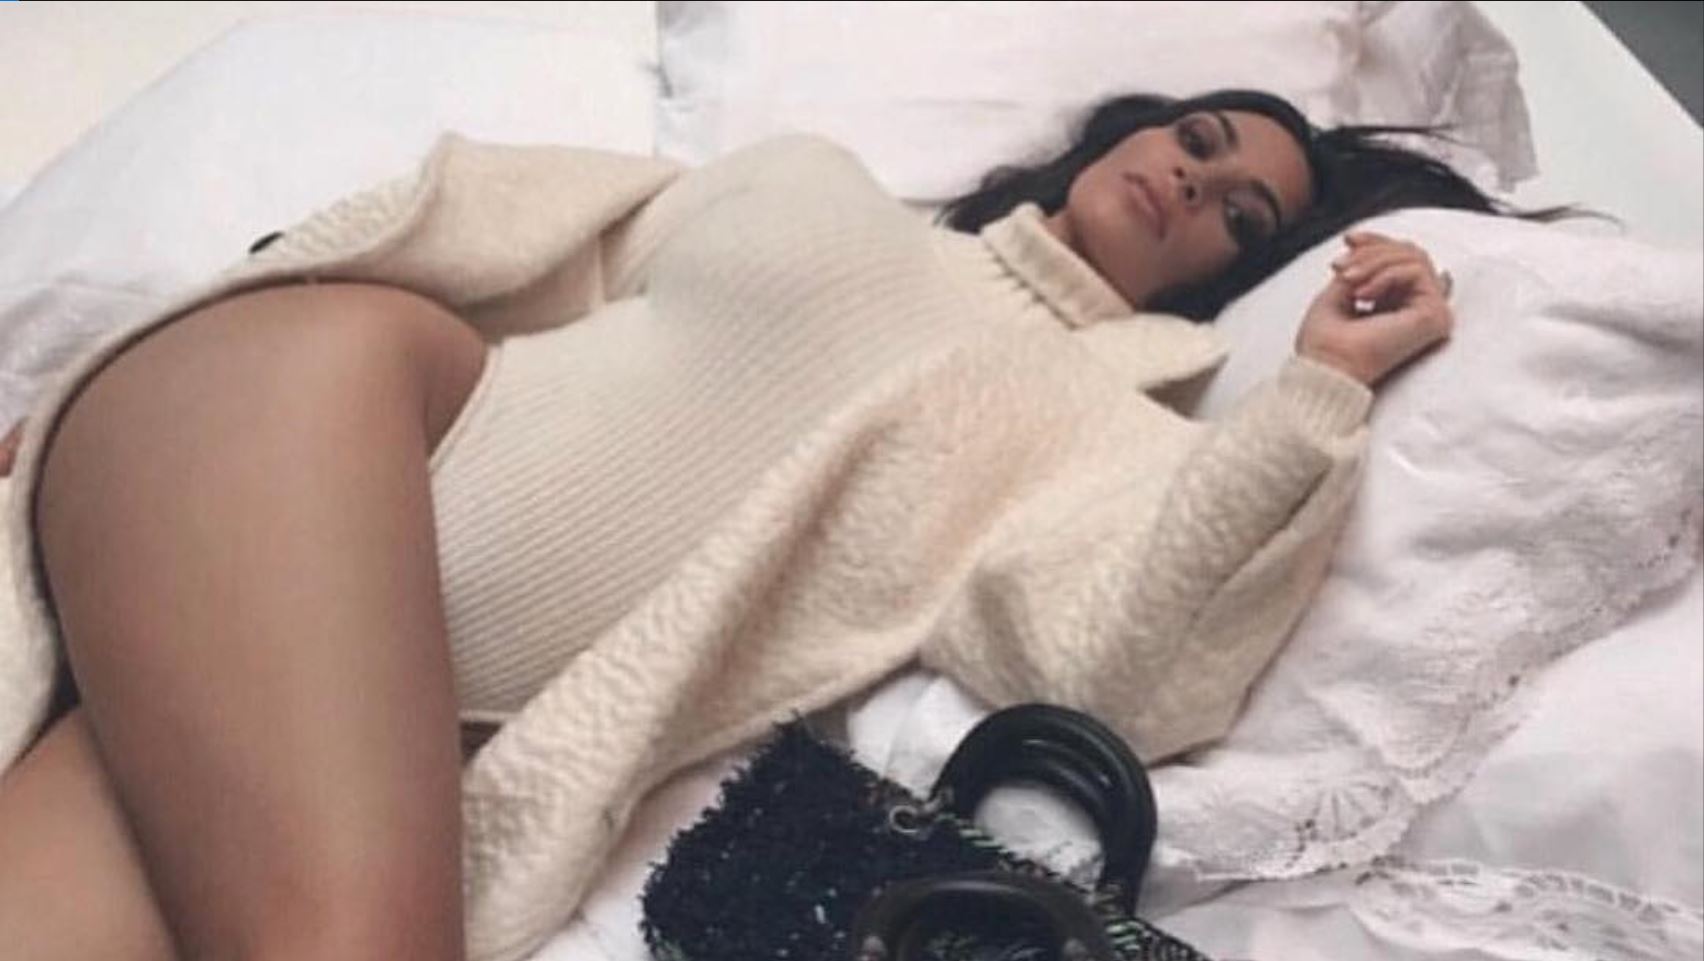 Kardashian bed sheets